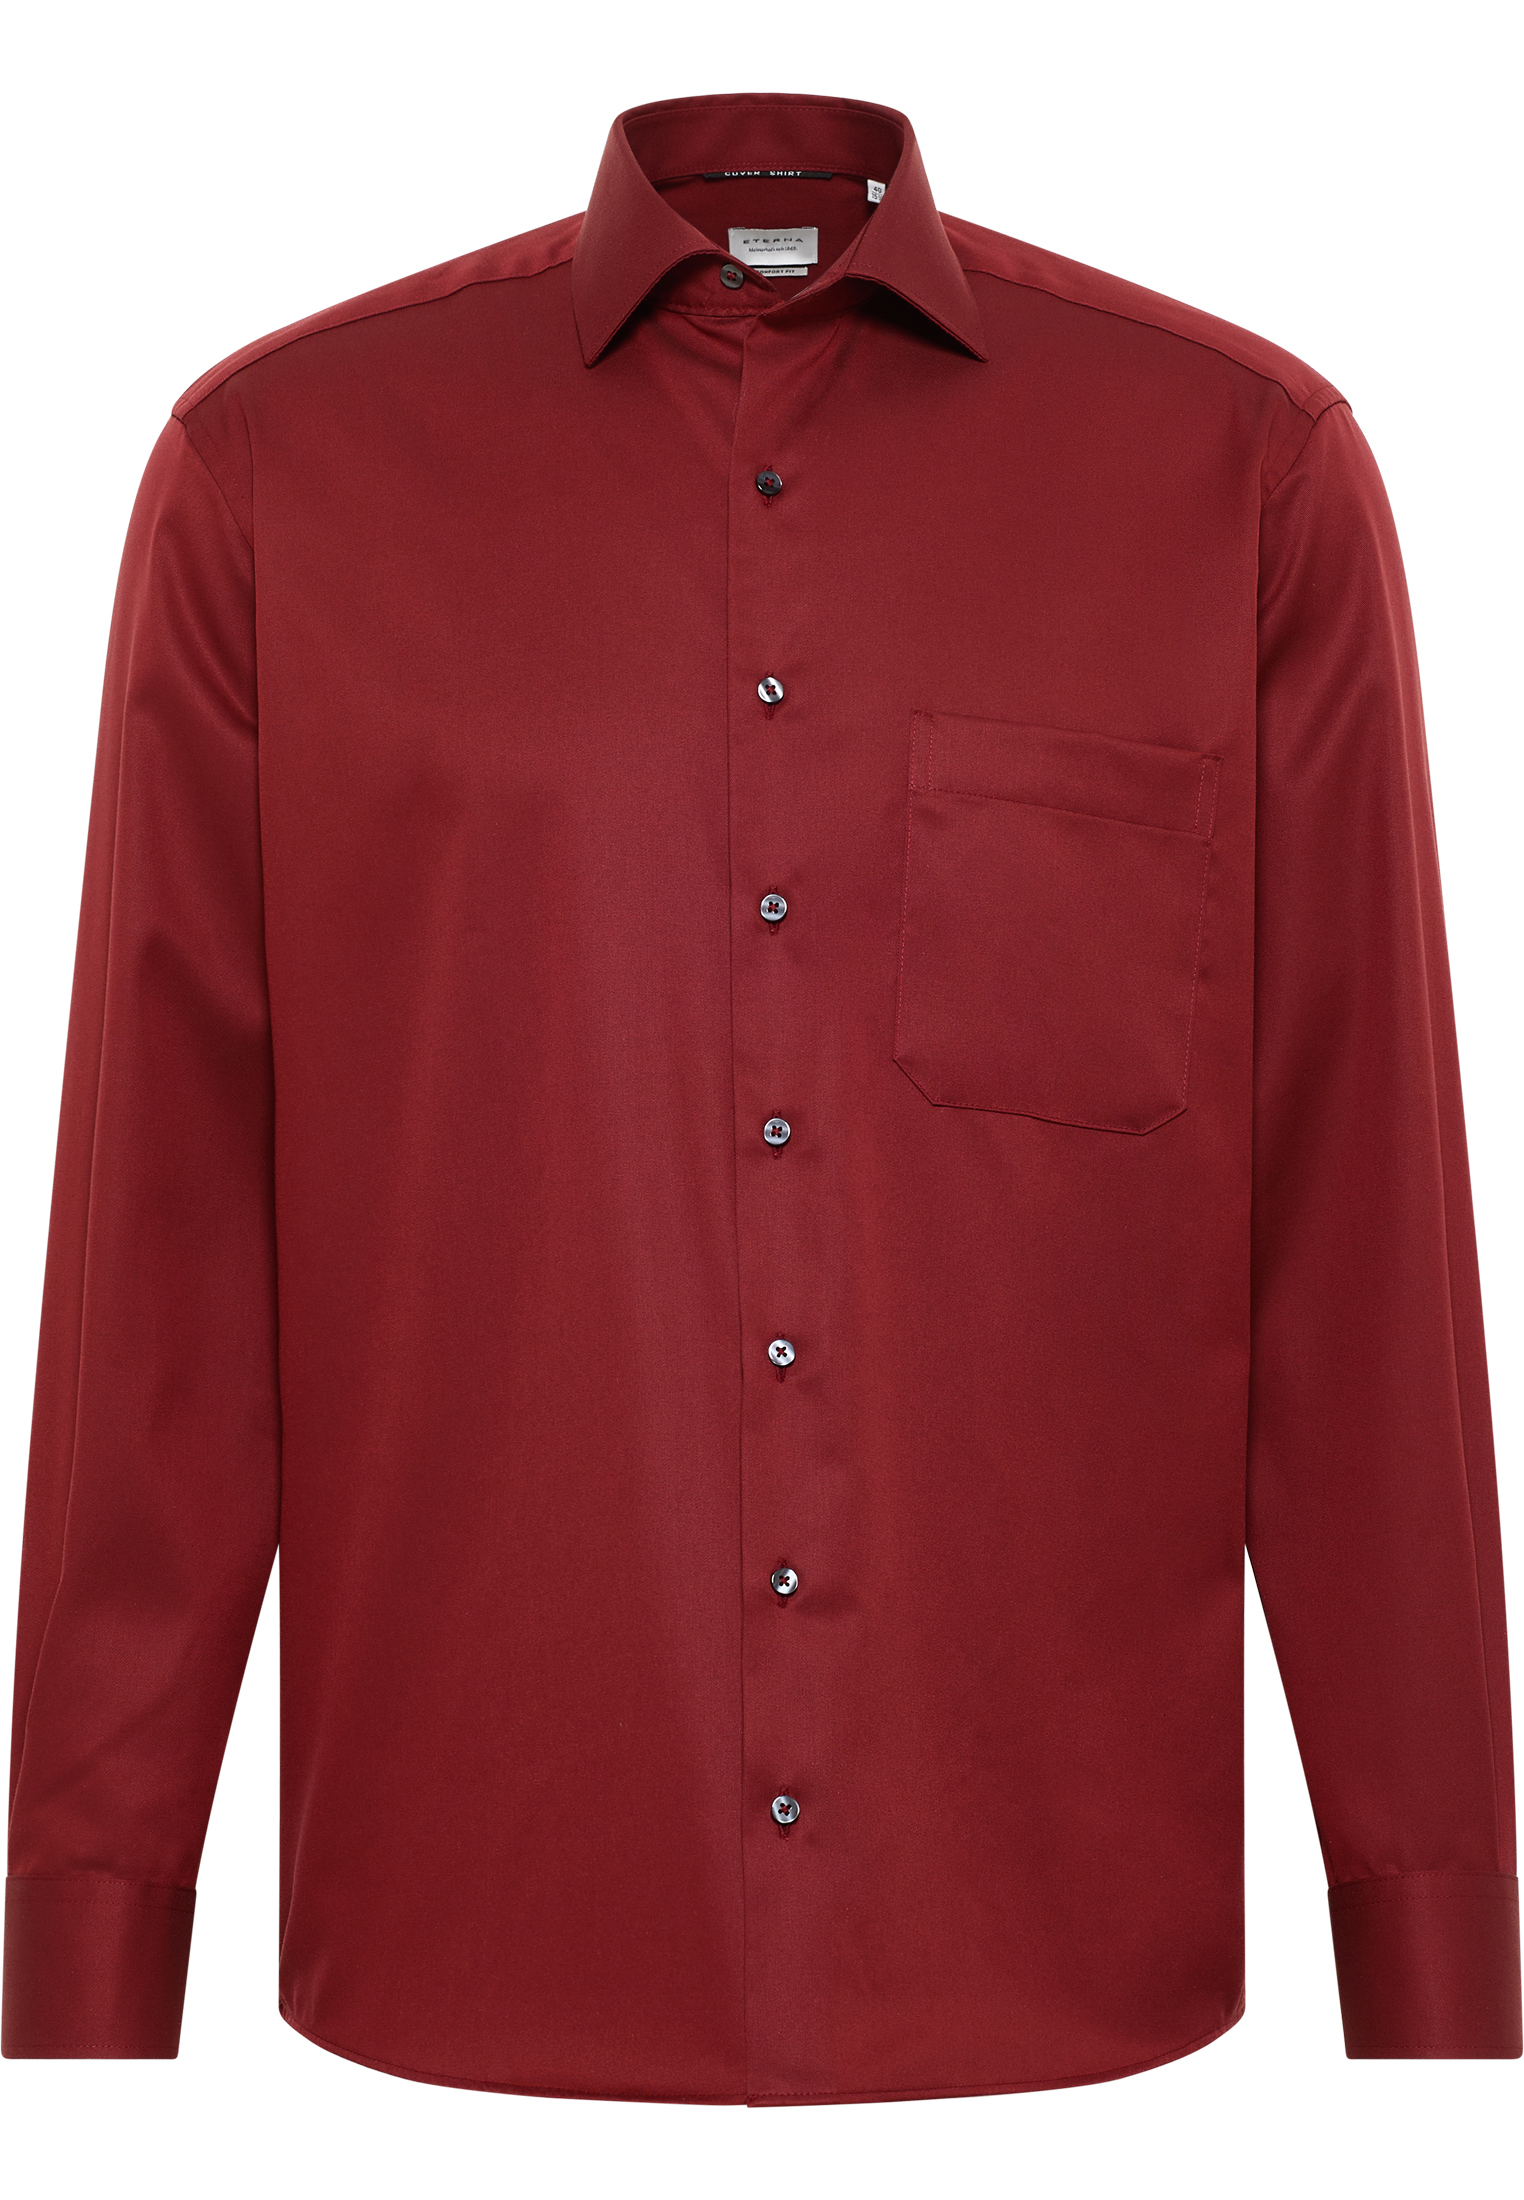 COMFORT FIT Cover Shirt in dunkelrot unifarben